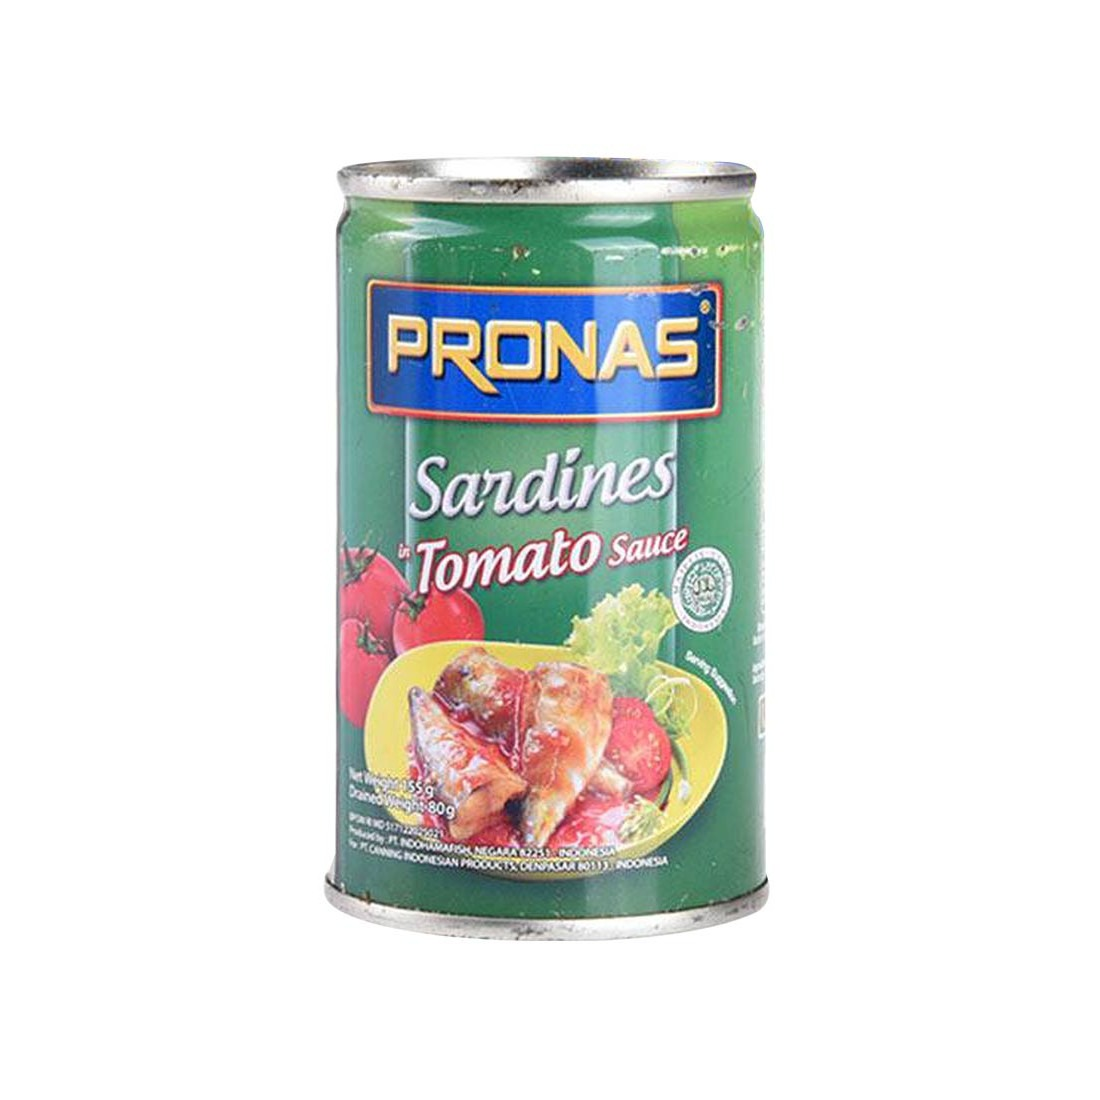 Pronas 155G Sardines In Tomato Sauce - Gerai Cahaya Indonesia